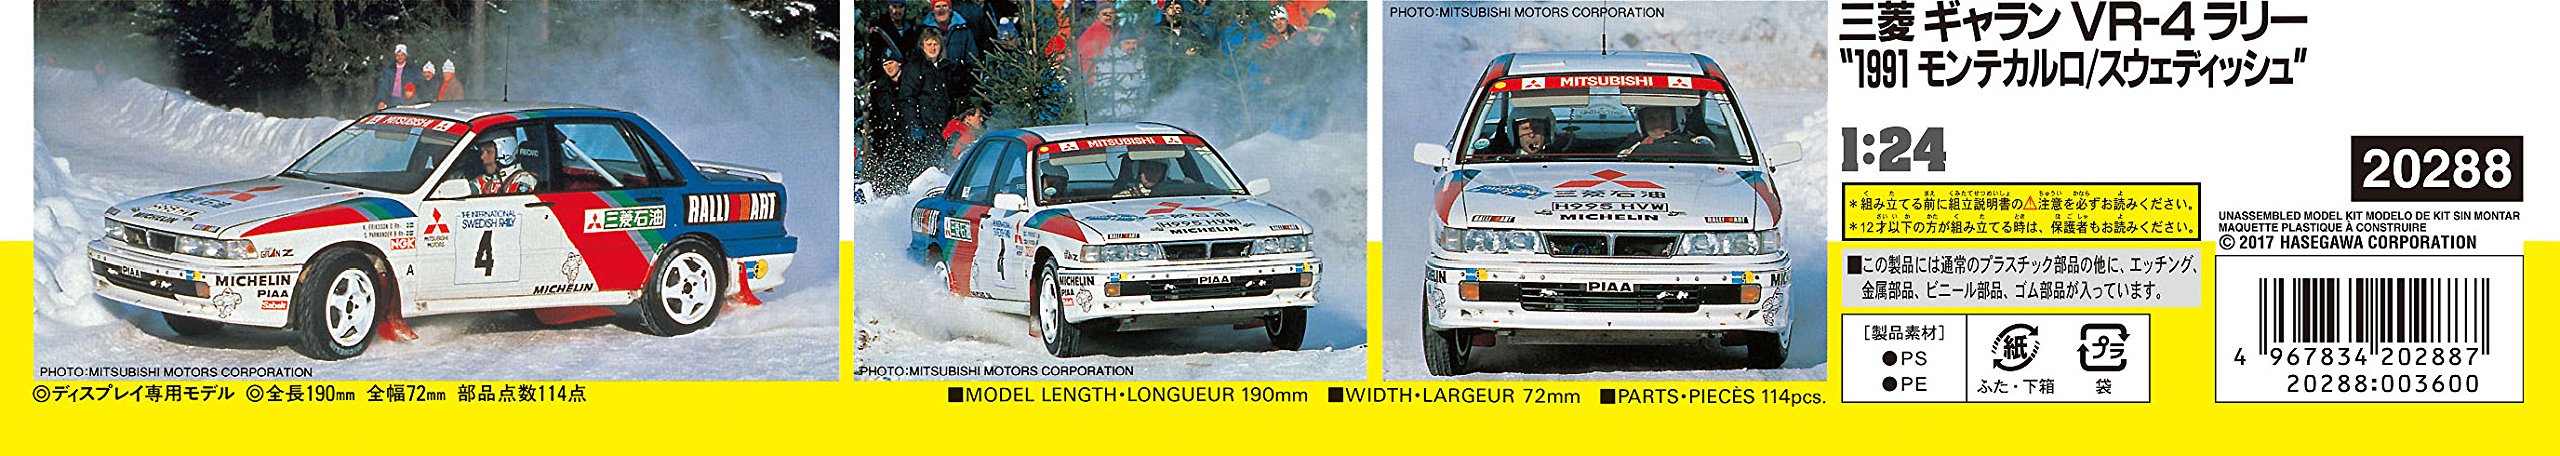 Hasegawa 20288 Mitsubishi Galant Vr-4 Rally 1991 Monte-Carlo/Suédois Kit échelle 1/24